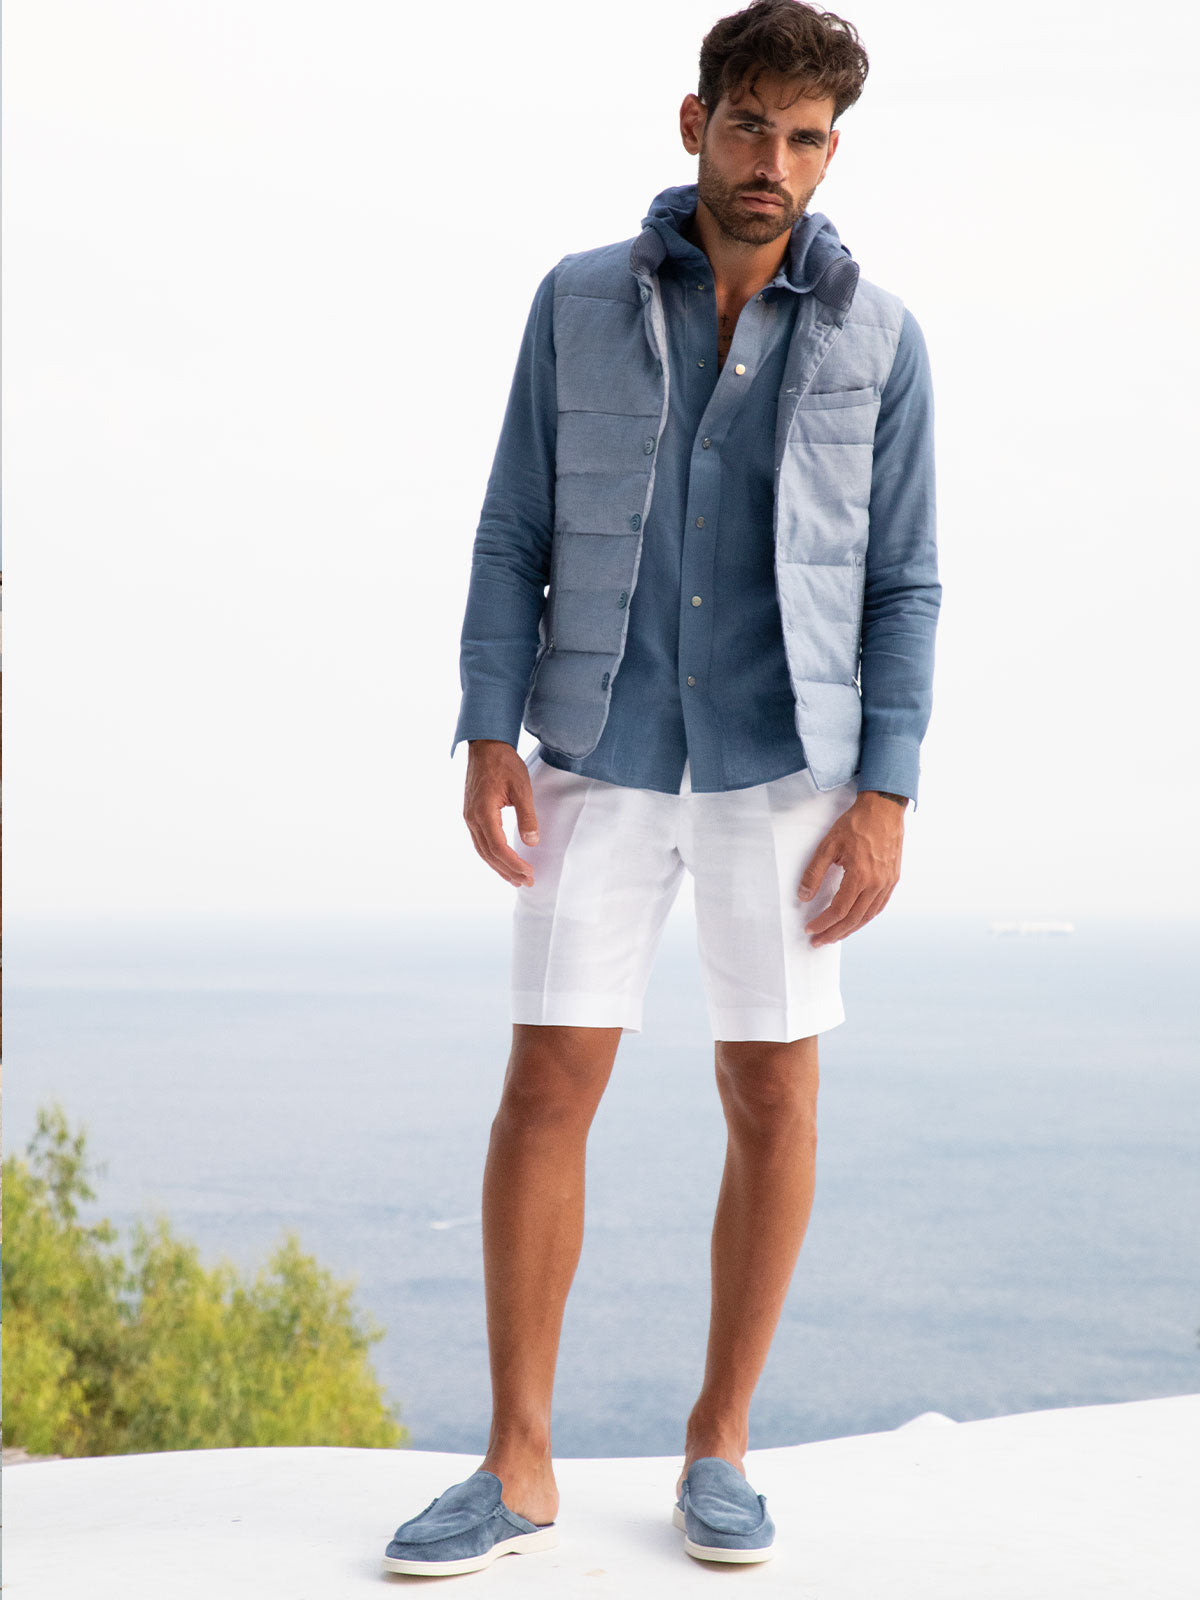 Sabot Portofino 100% Capri jeans leather sabot worn by model